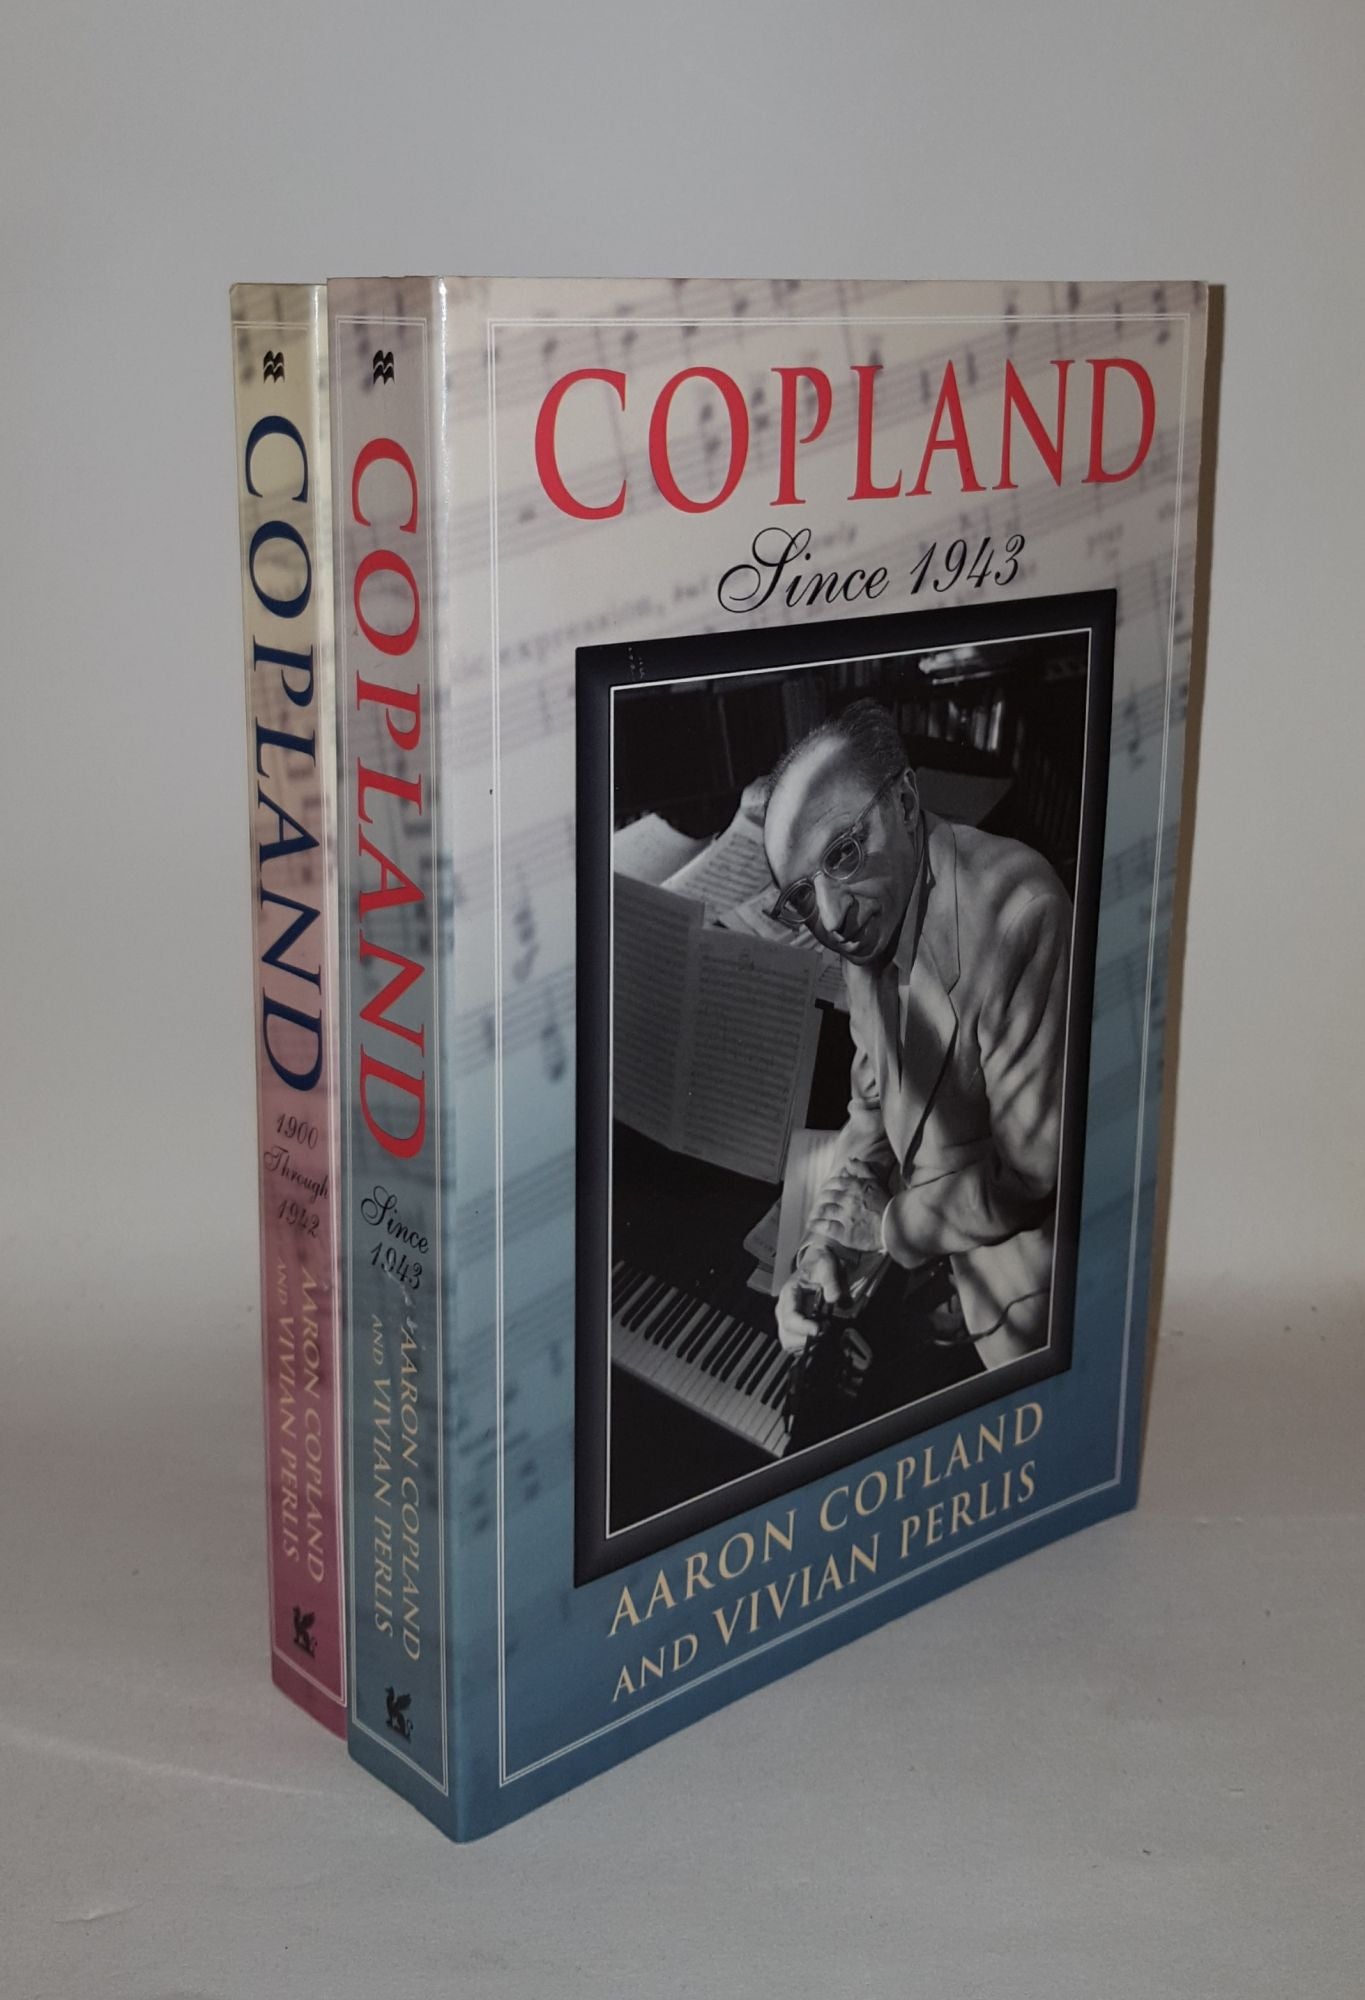 COPLAND Aaron, PERLIS Vivian - Copland 1900 Through 1942 [&] Copland Since 1943